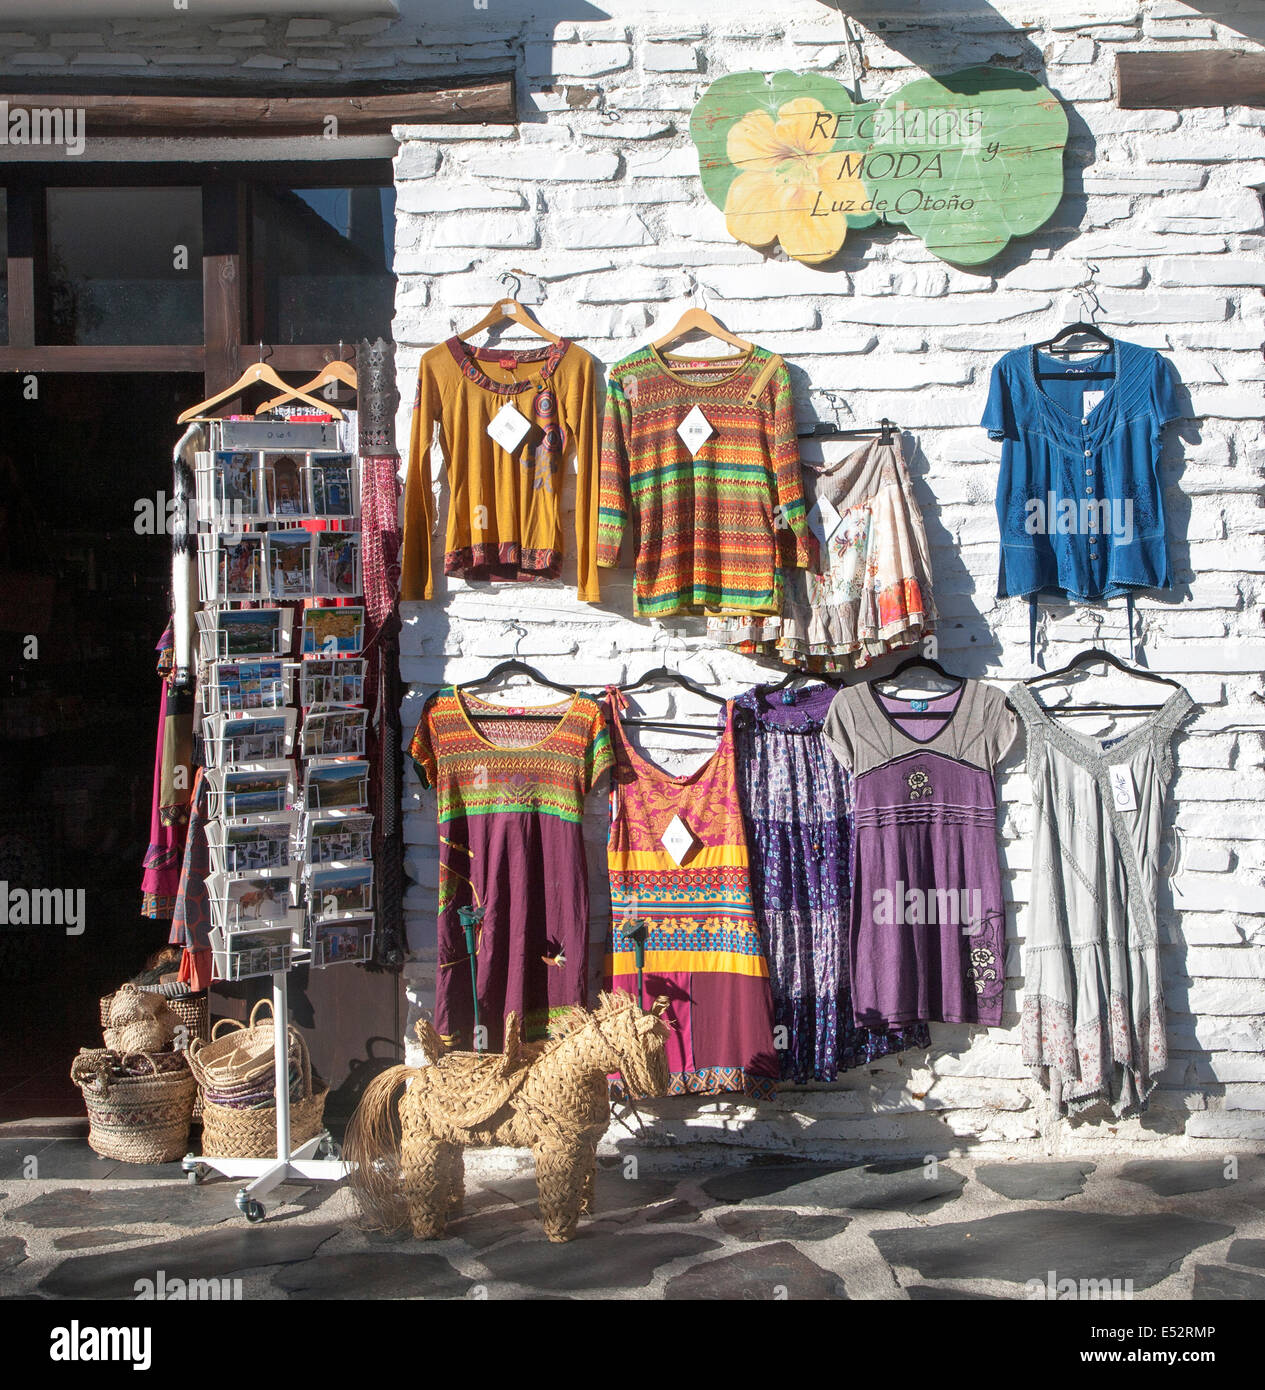 Clothes shop displaying traditional clothing, Capileira village, High Alpujarras, Sierra Nevada, Granada province, Spain Stock Photo